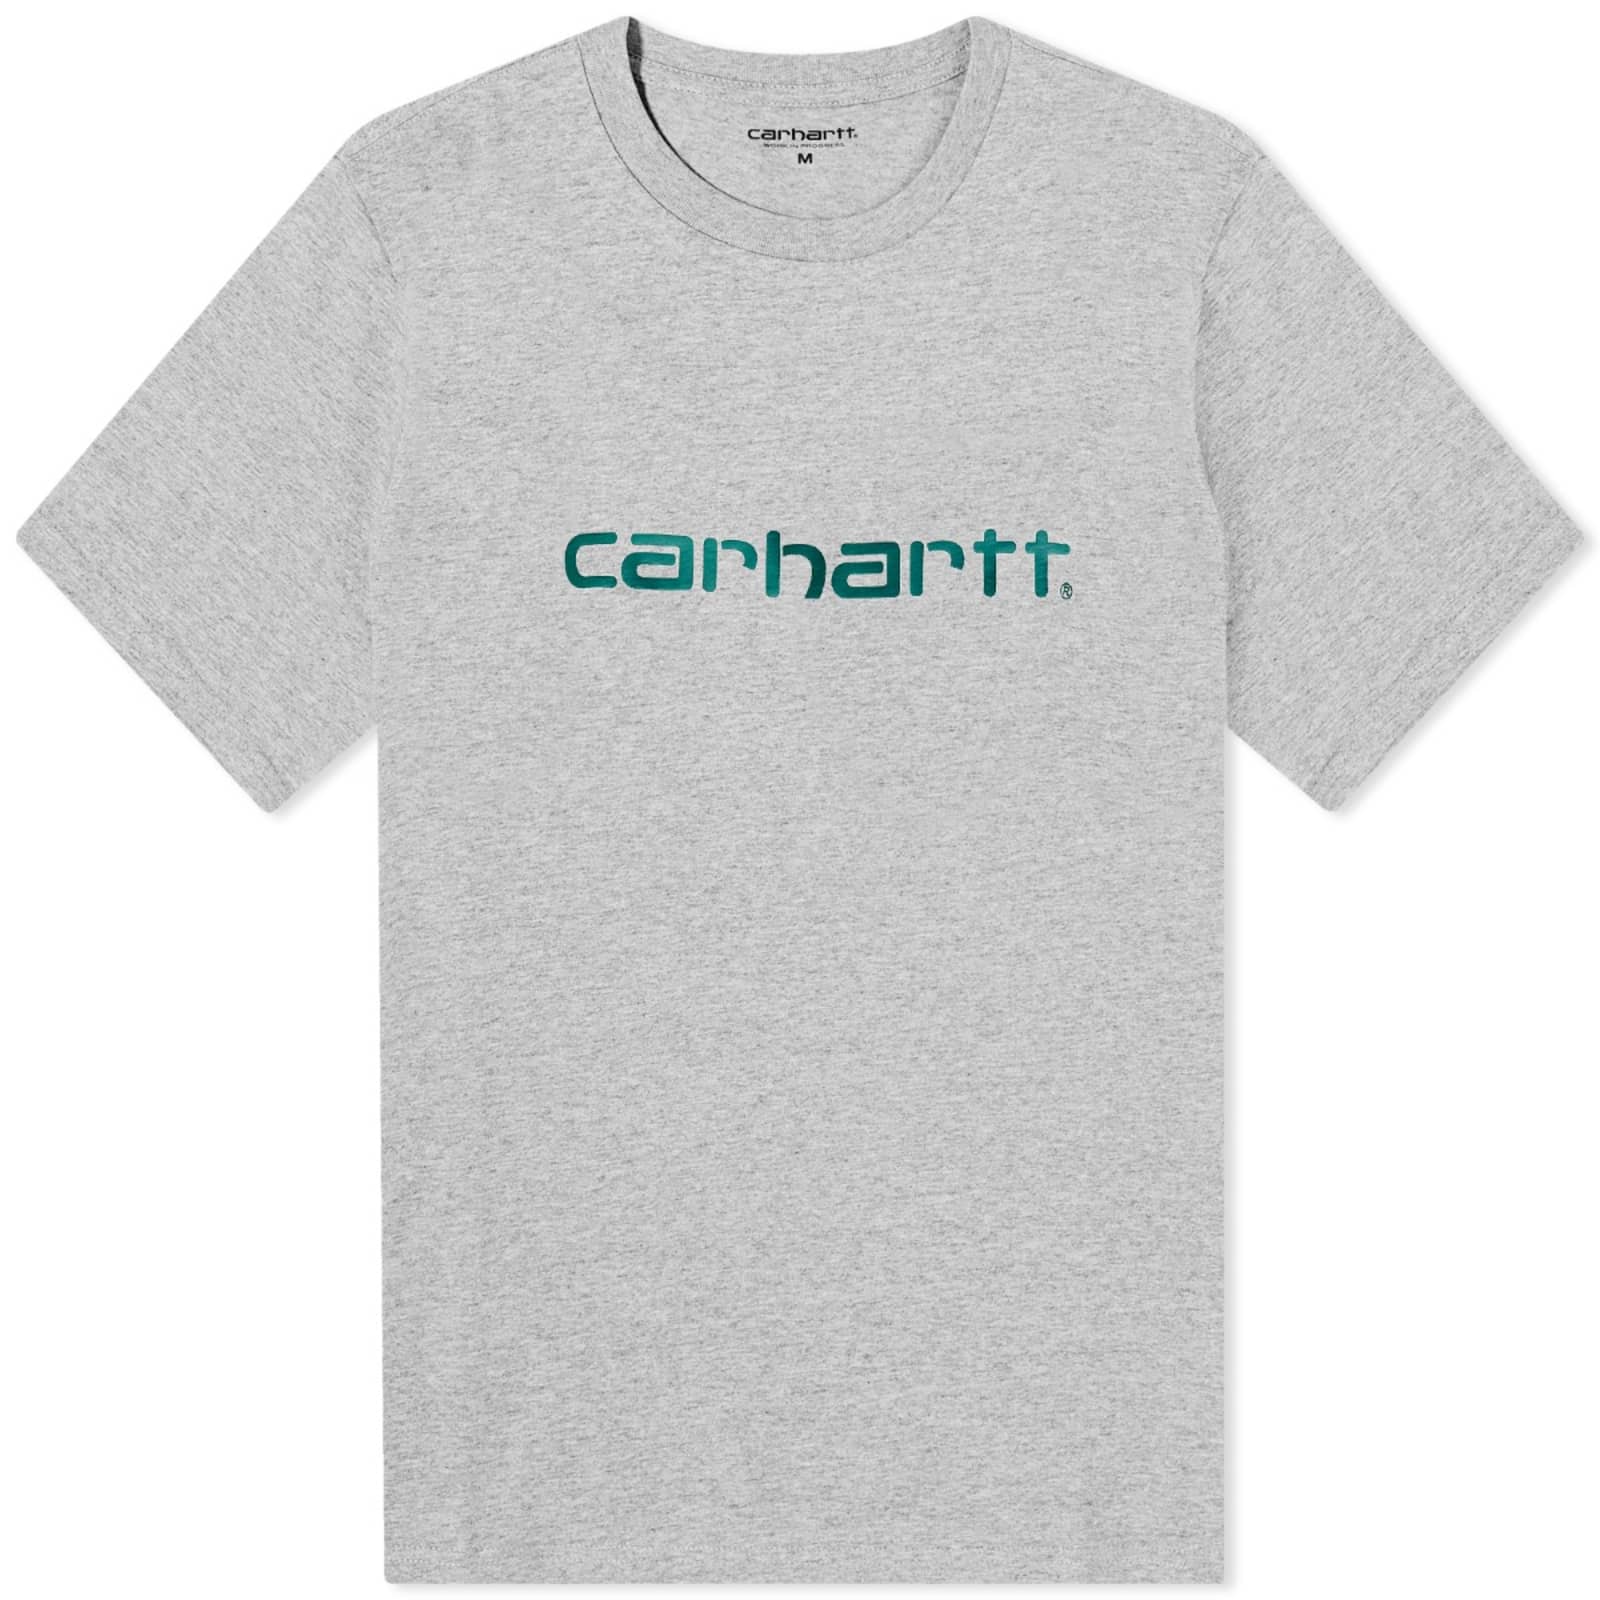 Футболка Carhartt Wip Script, серый футболка carhartt wip script embroidery белый